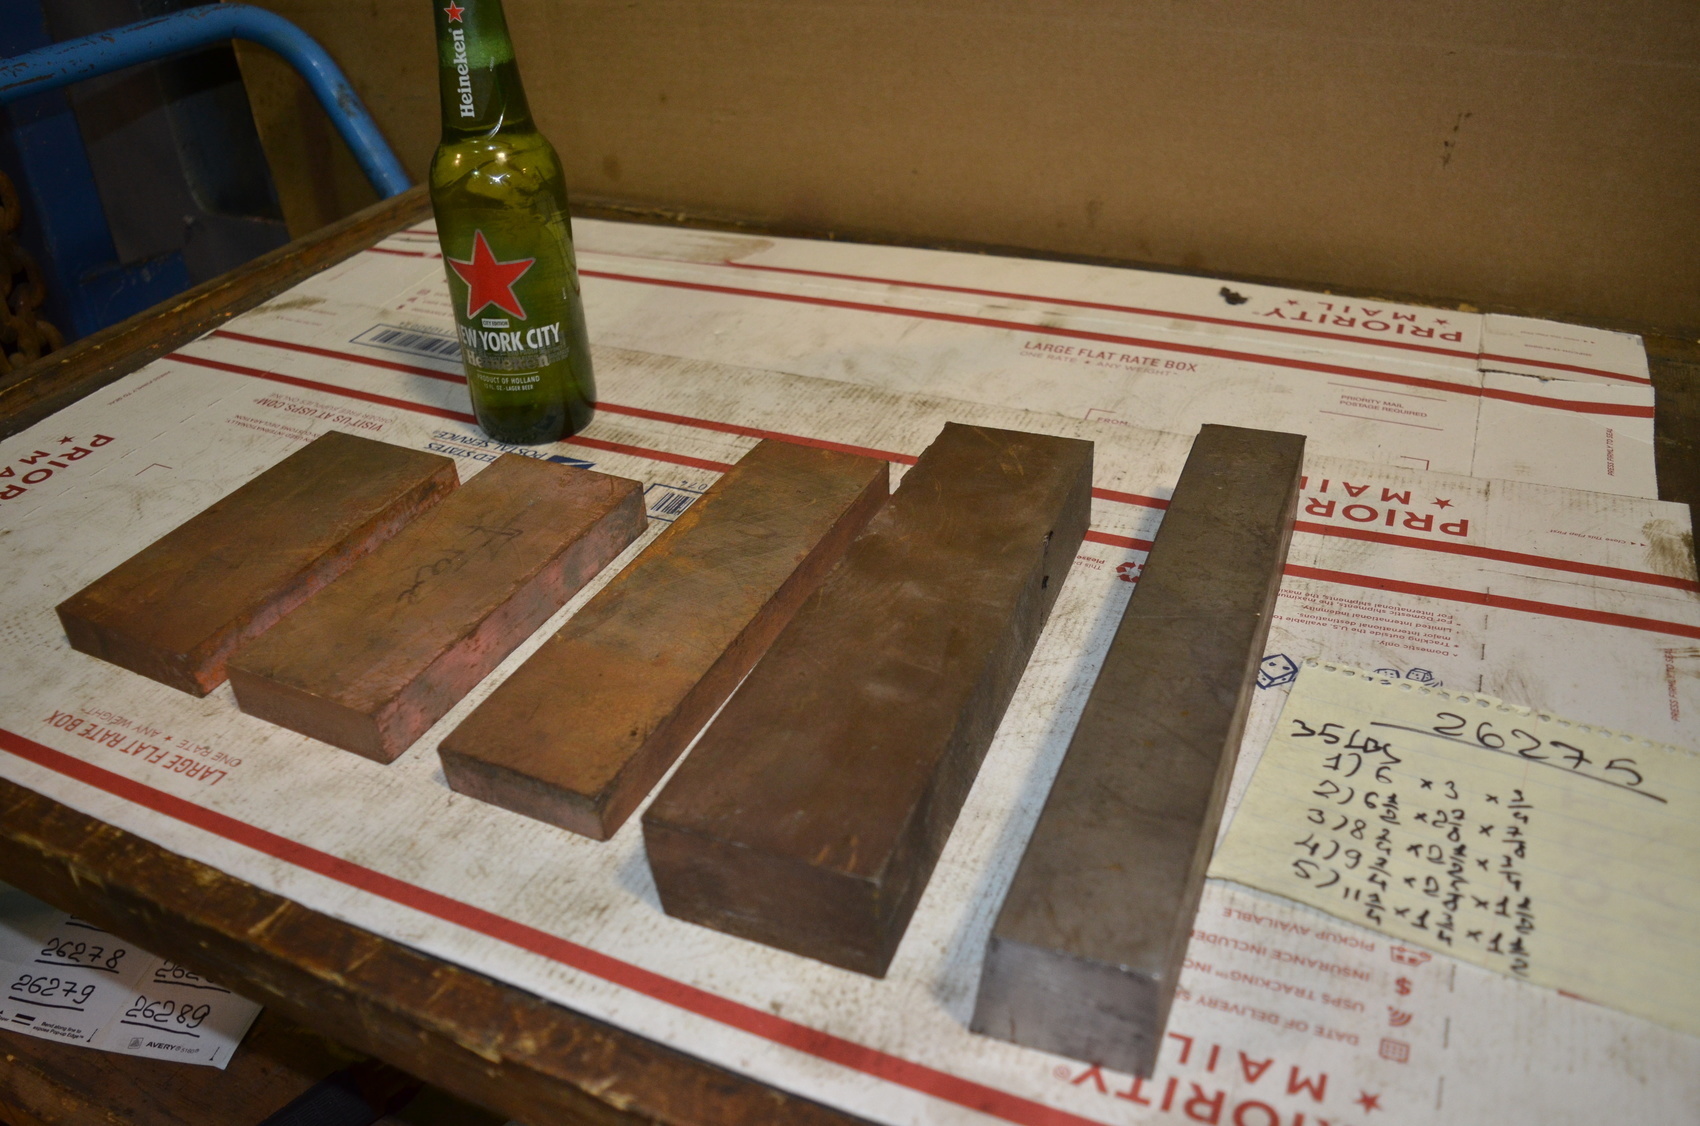 Lot of 5 steel Rectangular Bar for blacksmith anvil,35 lbs